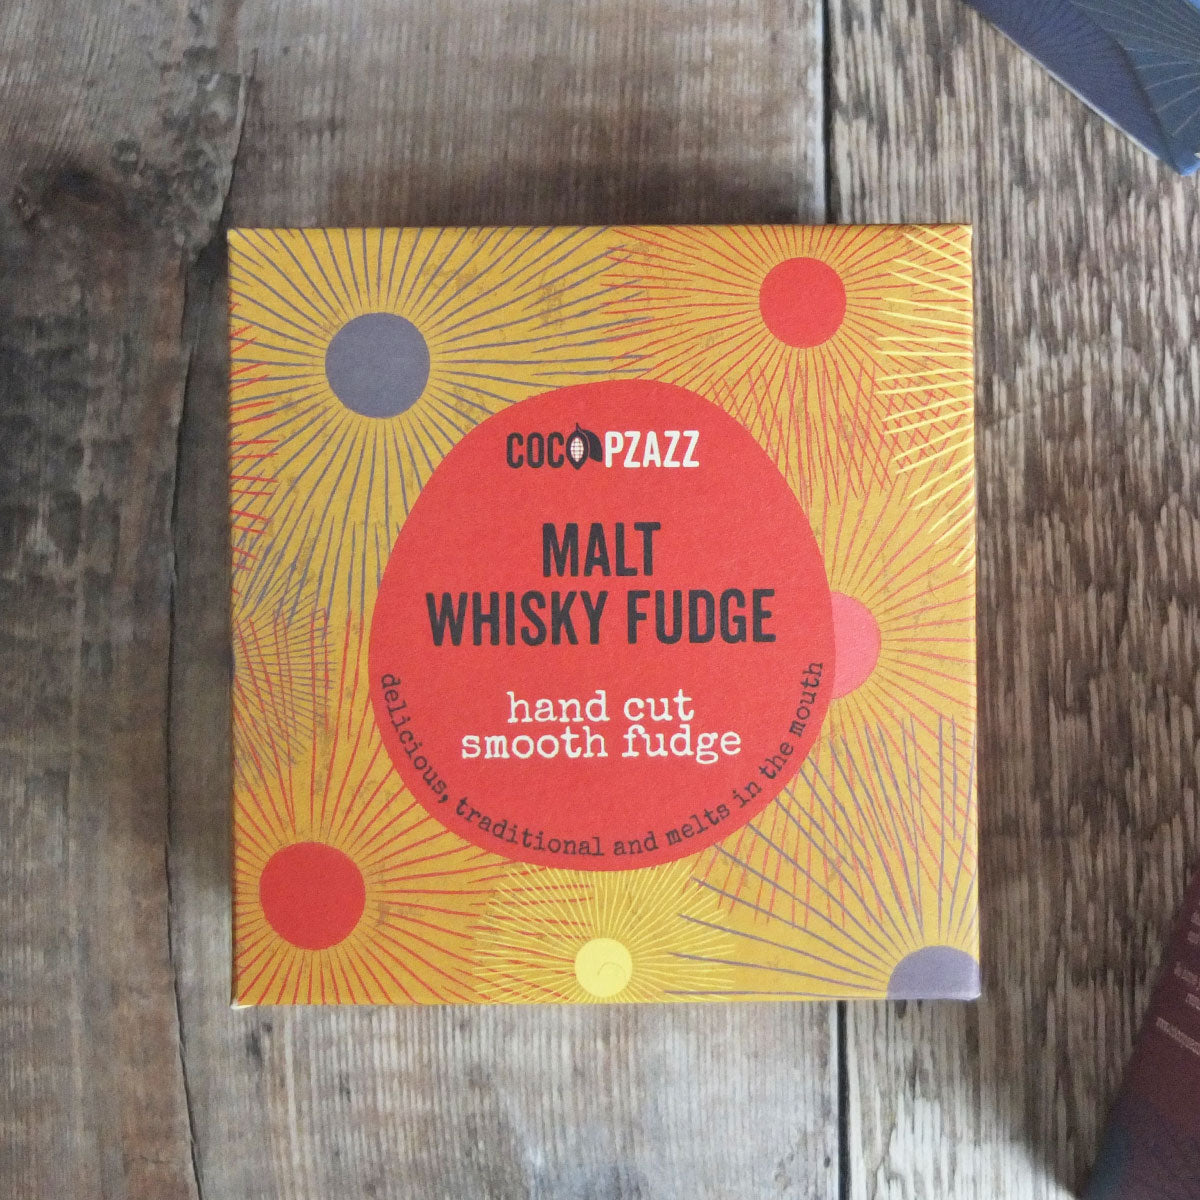 Malt Whisky Fudge Box by Coco Pzazz